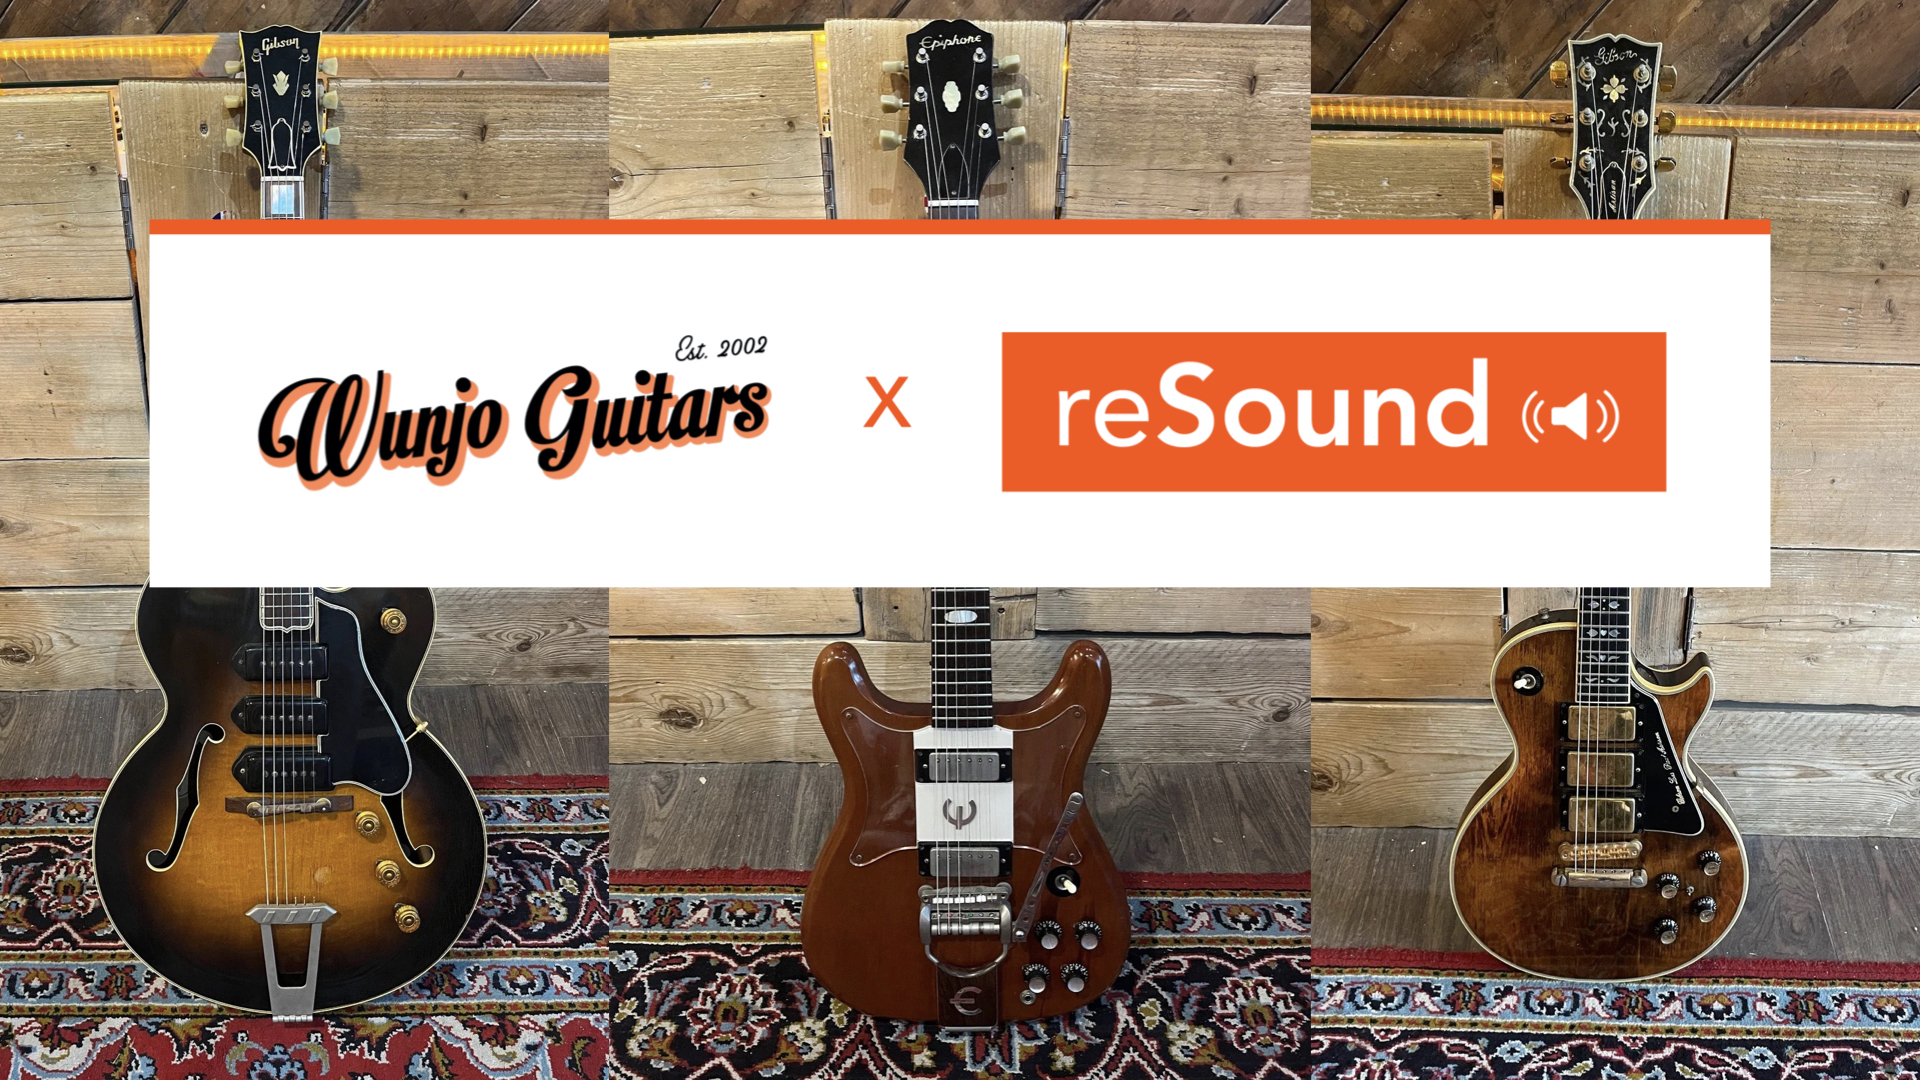 Wunjo Guitars joins reSound: Tradition Meets Innovation on Denmark Street